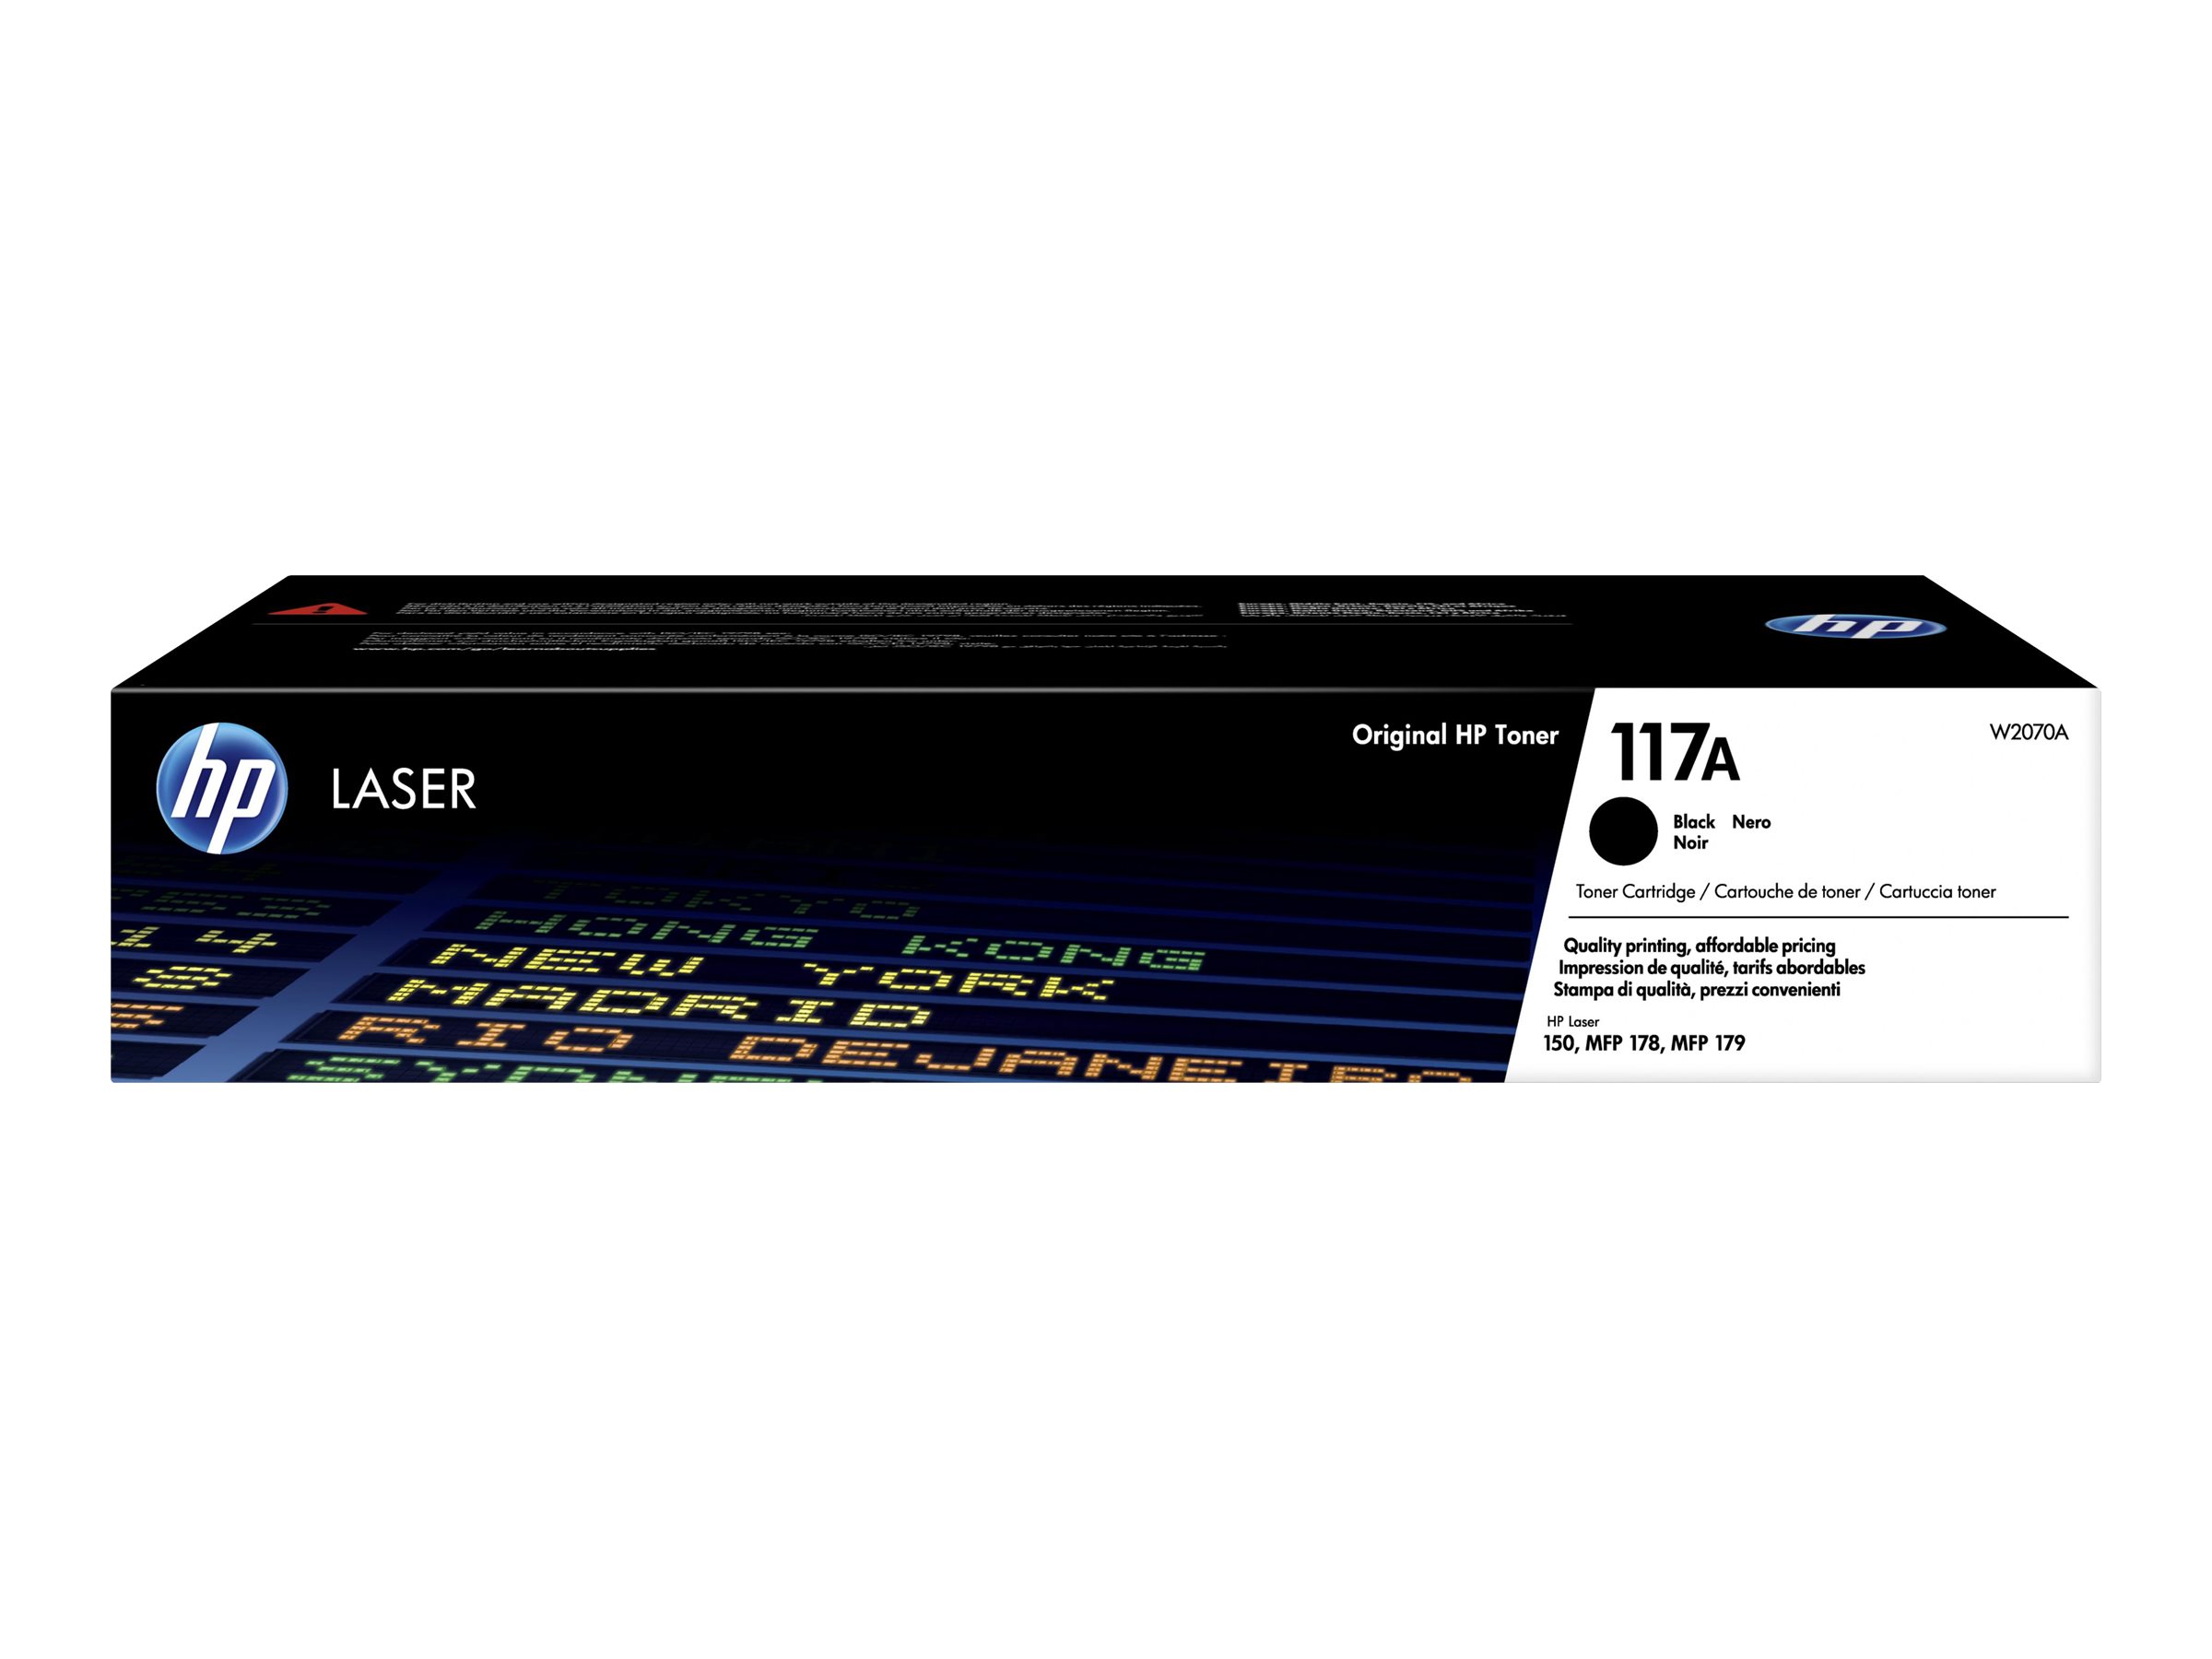 HP 117A Black  Laser Toner Cartridge